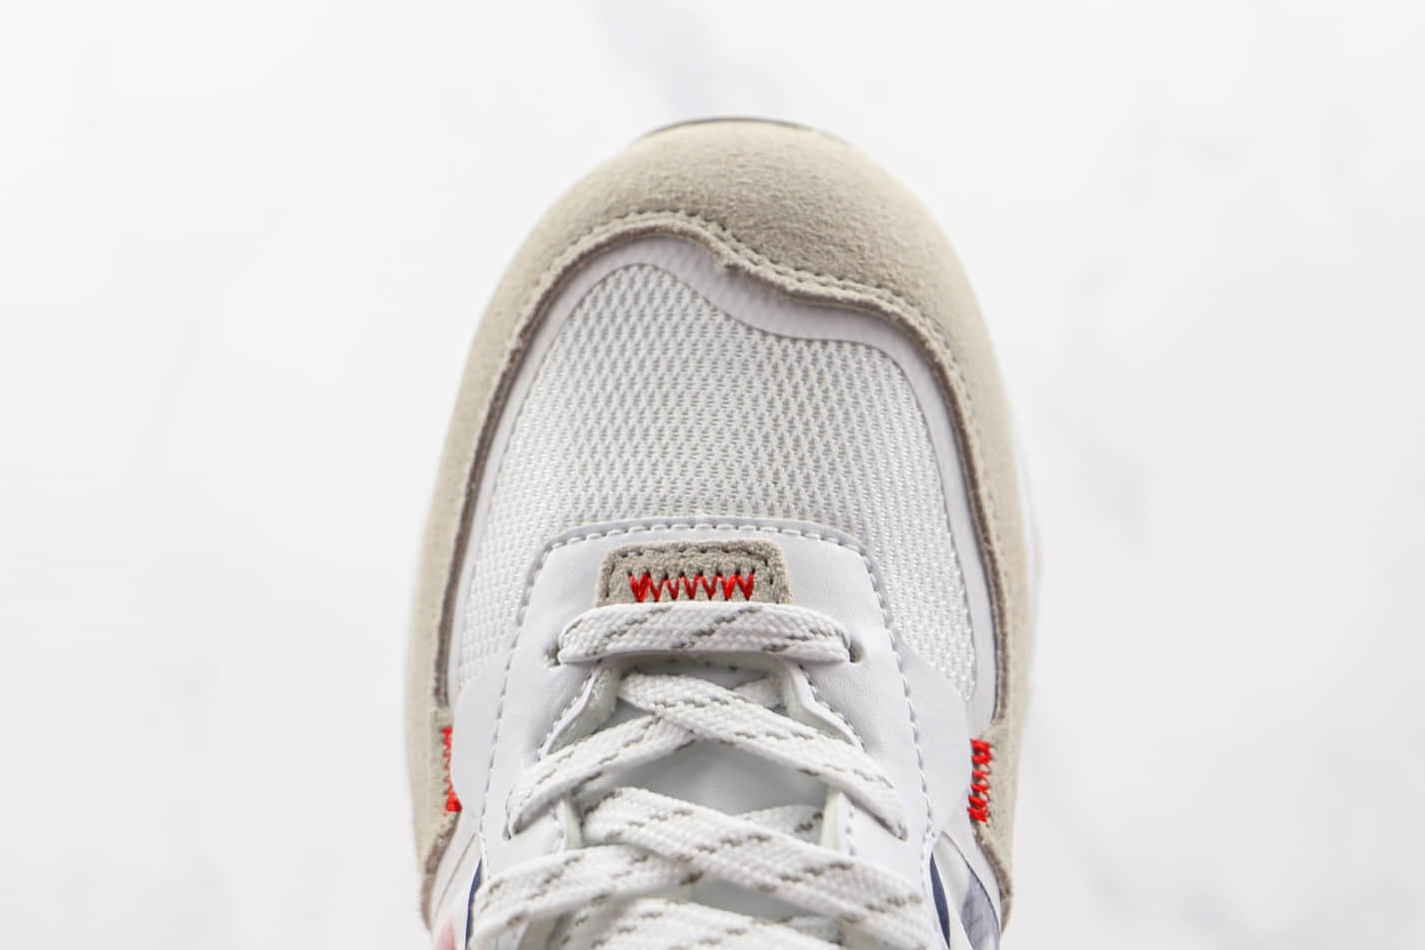 New Balance 574 White Natural Indigo - Classic and Stylish Sneakers